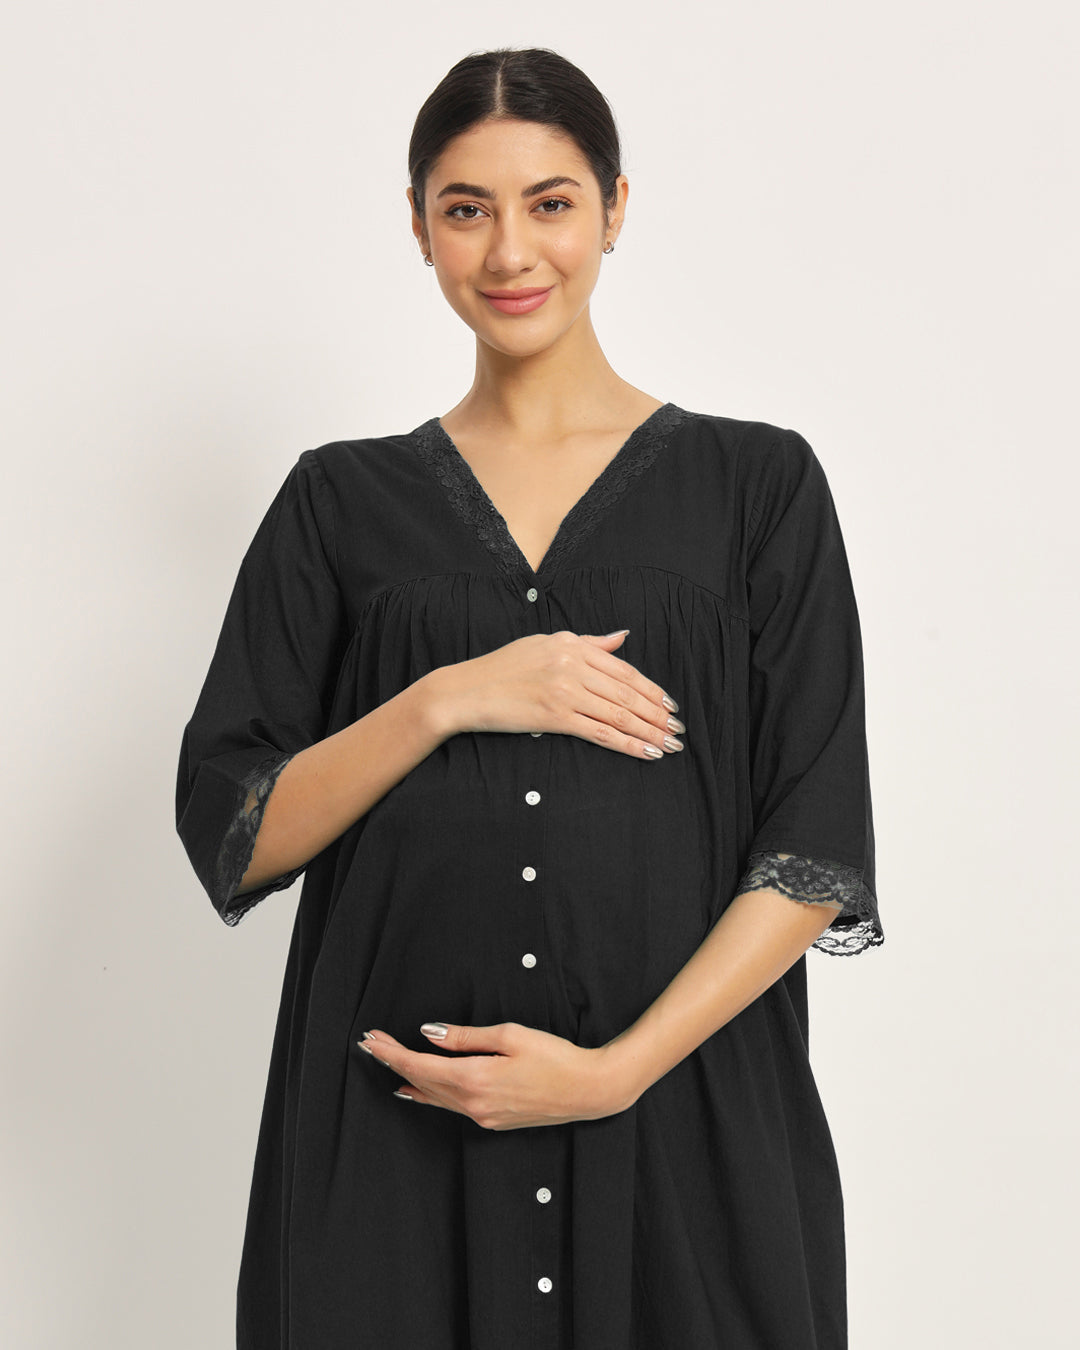 Classic Black Preggo & Posh Maternity & Nursing Dress